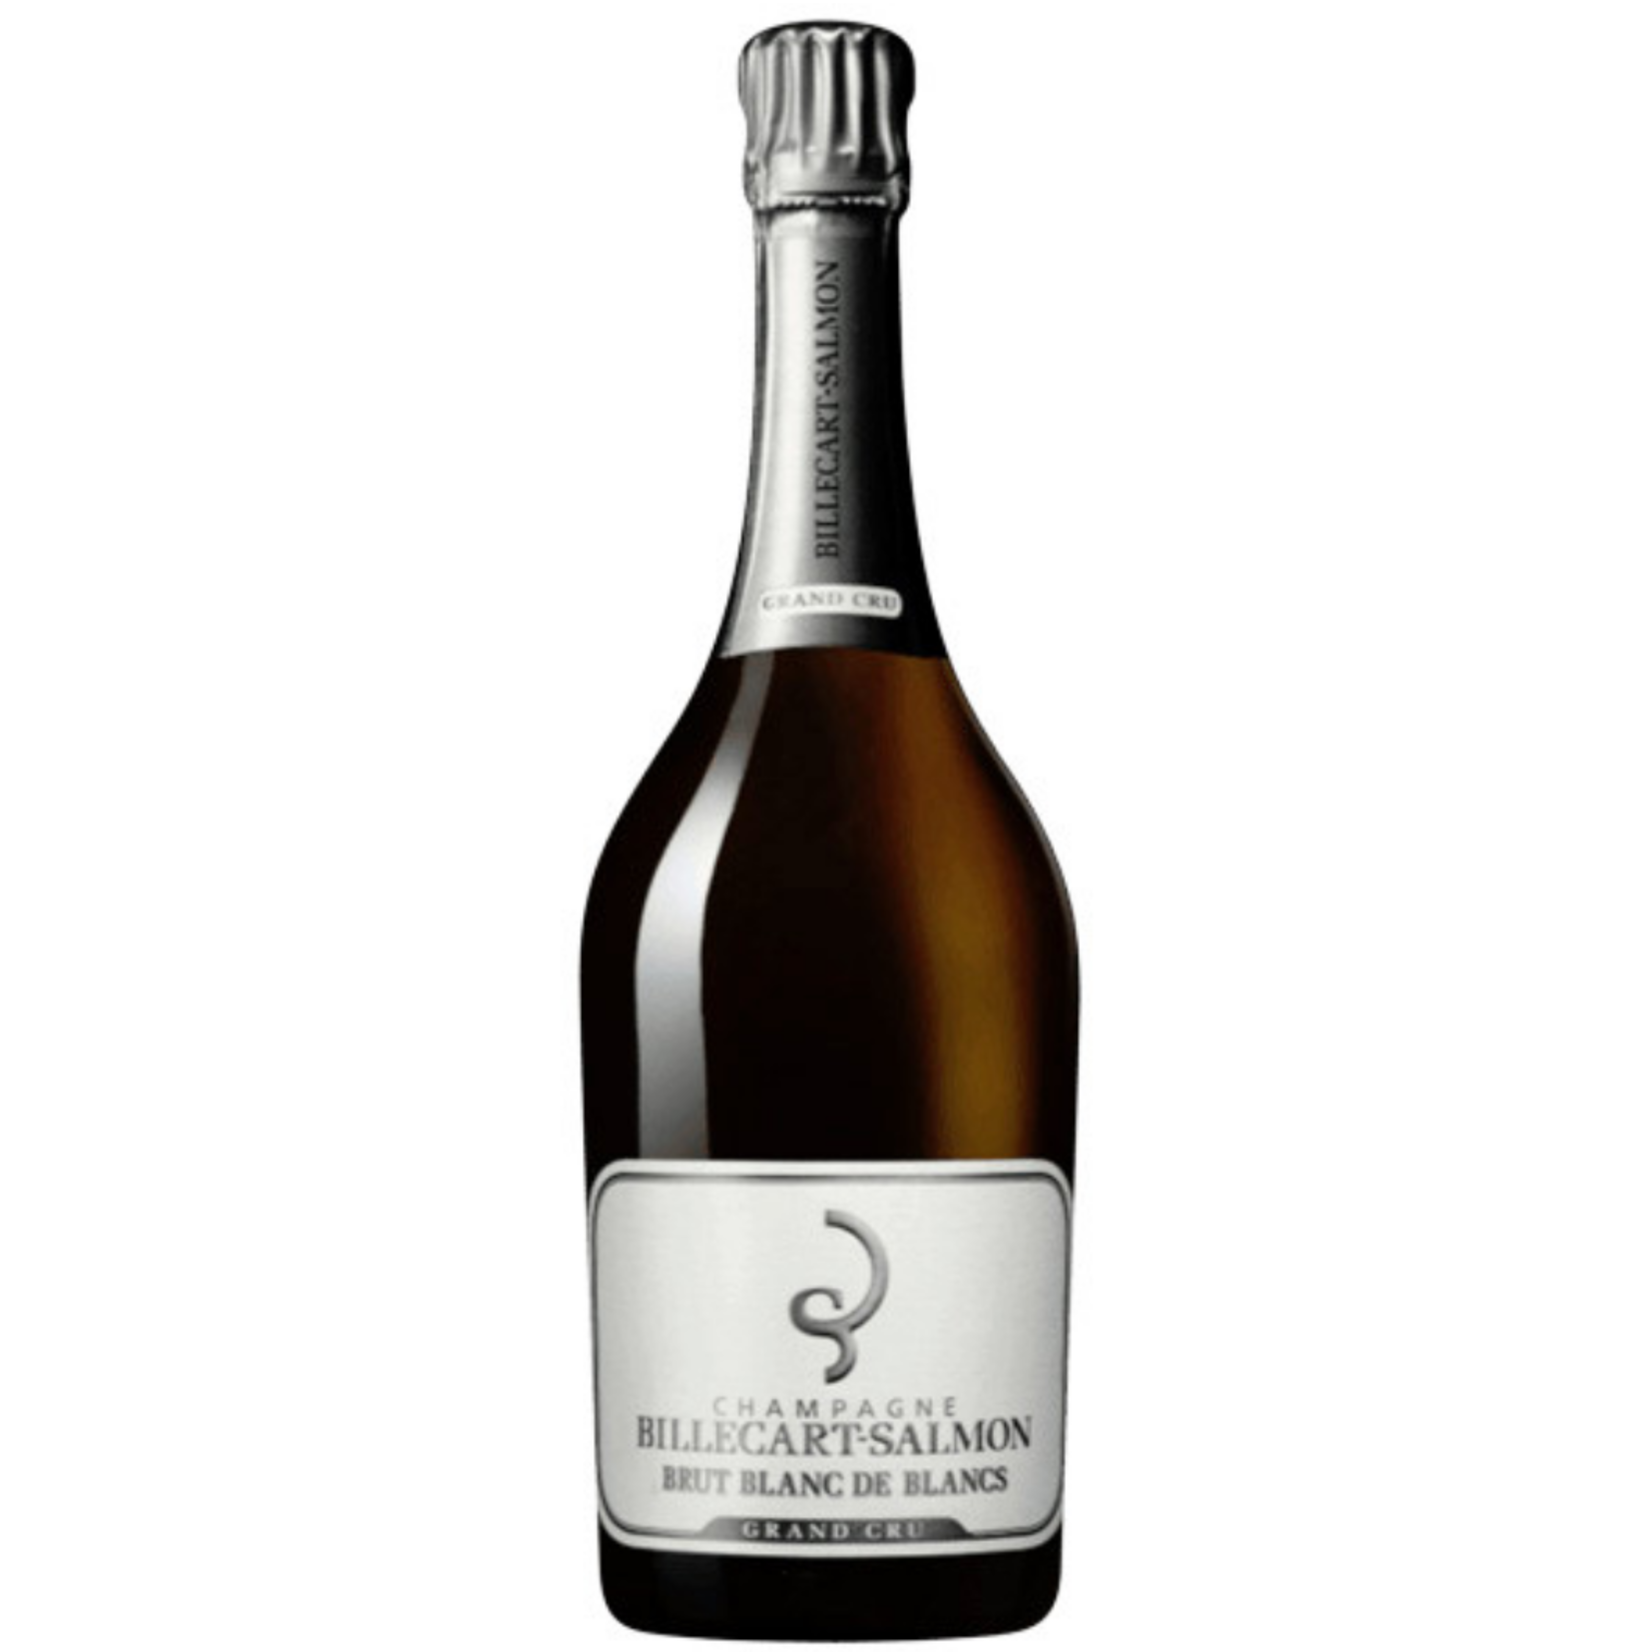 NV, Billecart-Salmon Brut Blanc De Blancs Grand Cru, Champagne, Ay, Champagne, France, 12% Alc, CTnr,